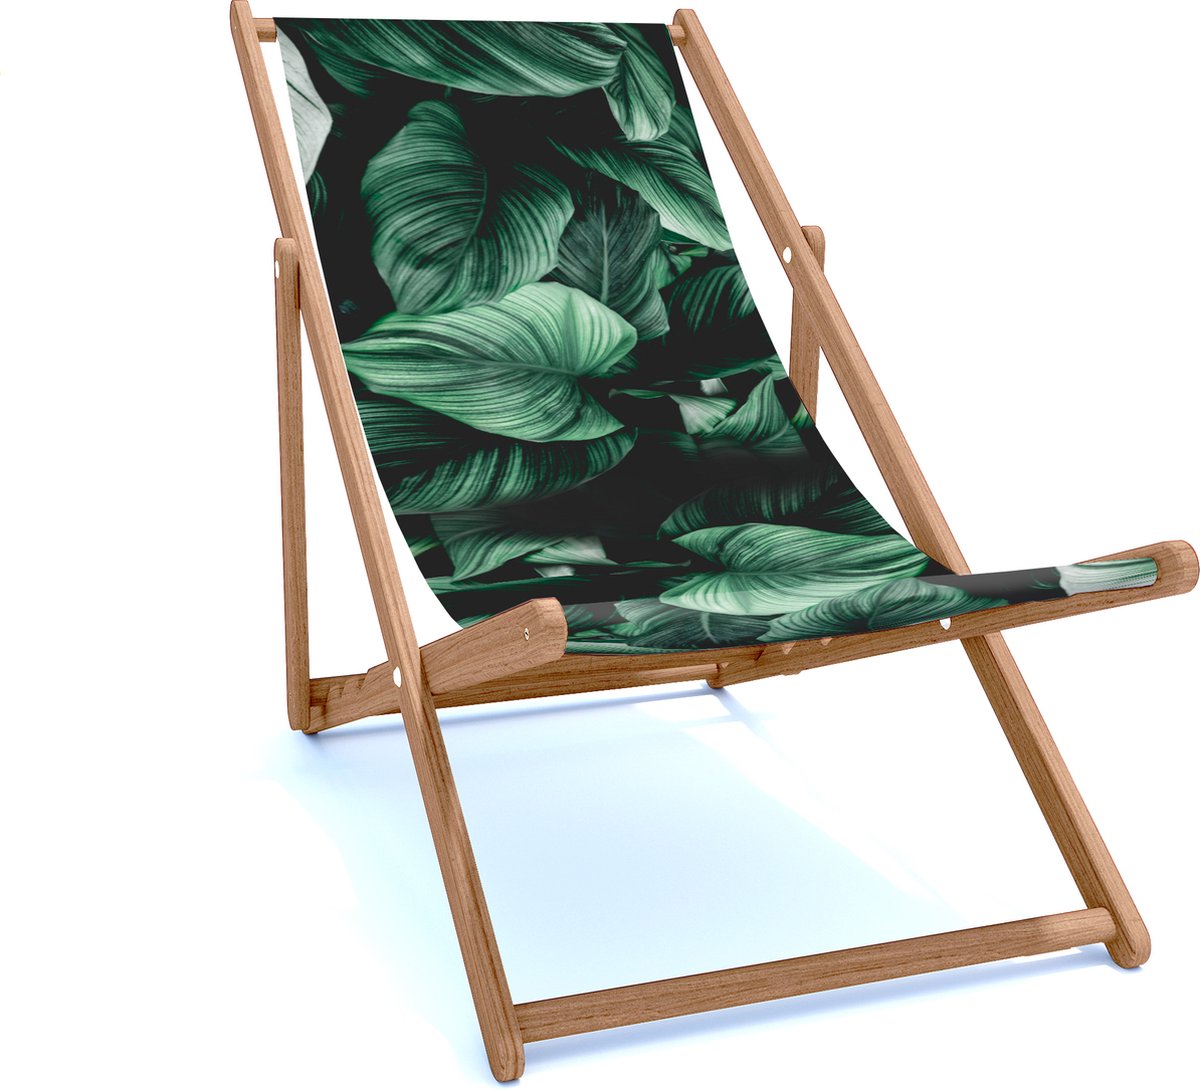 Holtaz Strandstoel Hout Inklapbaar Comfortabele Zonnebed Ligbed met verstelbare Lighoogte houten frame met stoffen Bladeren